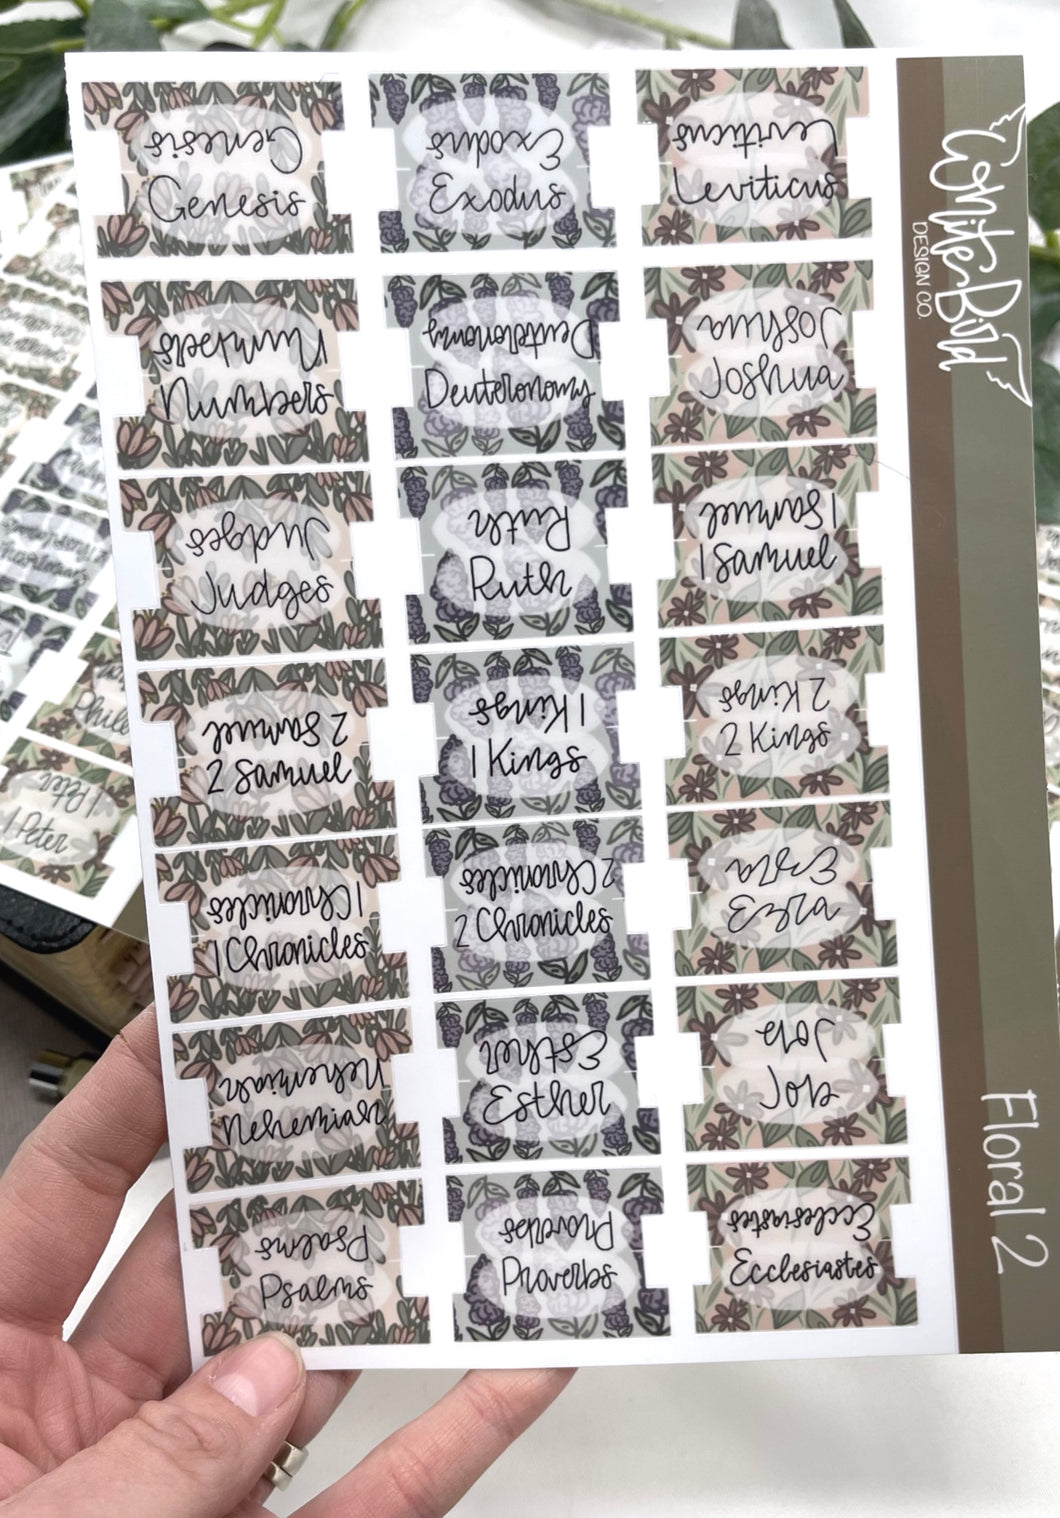 Floral 2 Bible tabs |Laminated Vinyl Sticker Tabs| Old Testament| New Testament